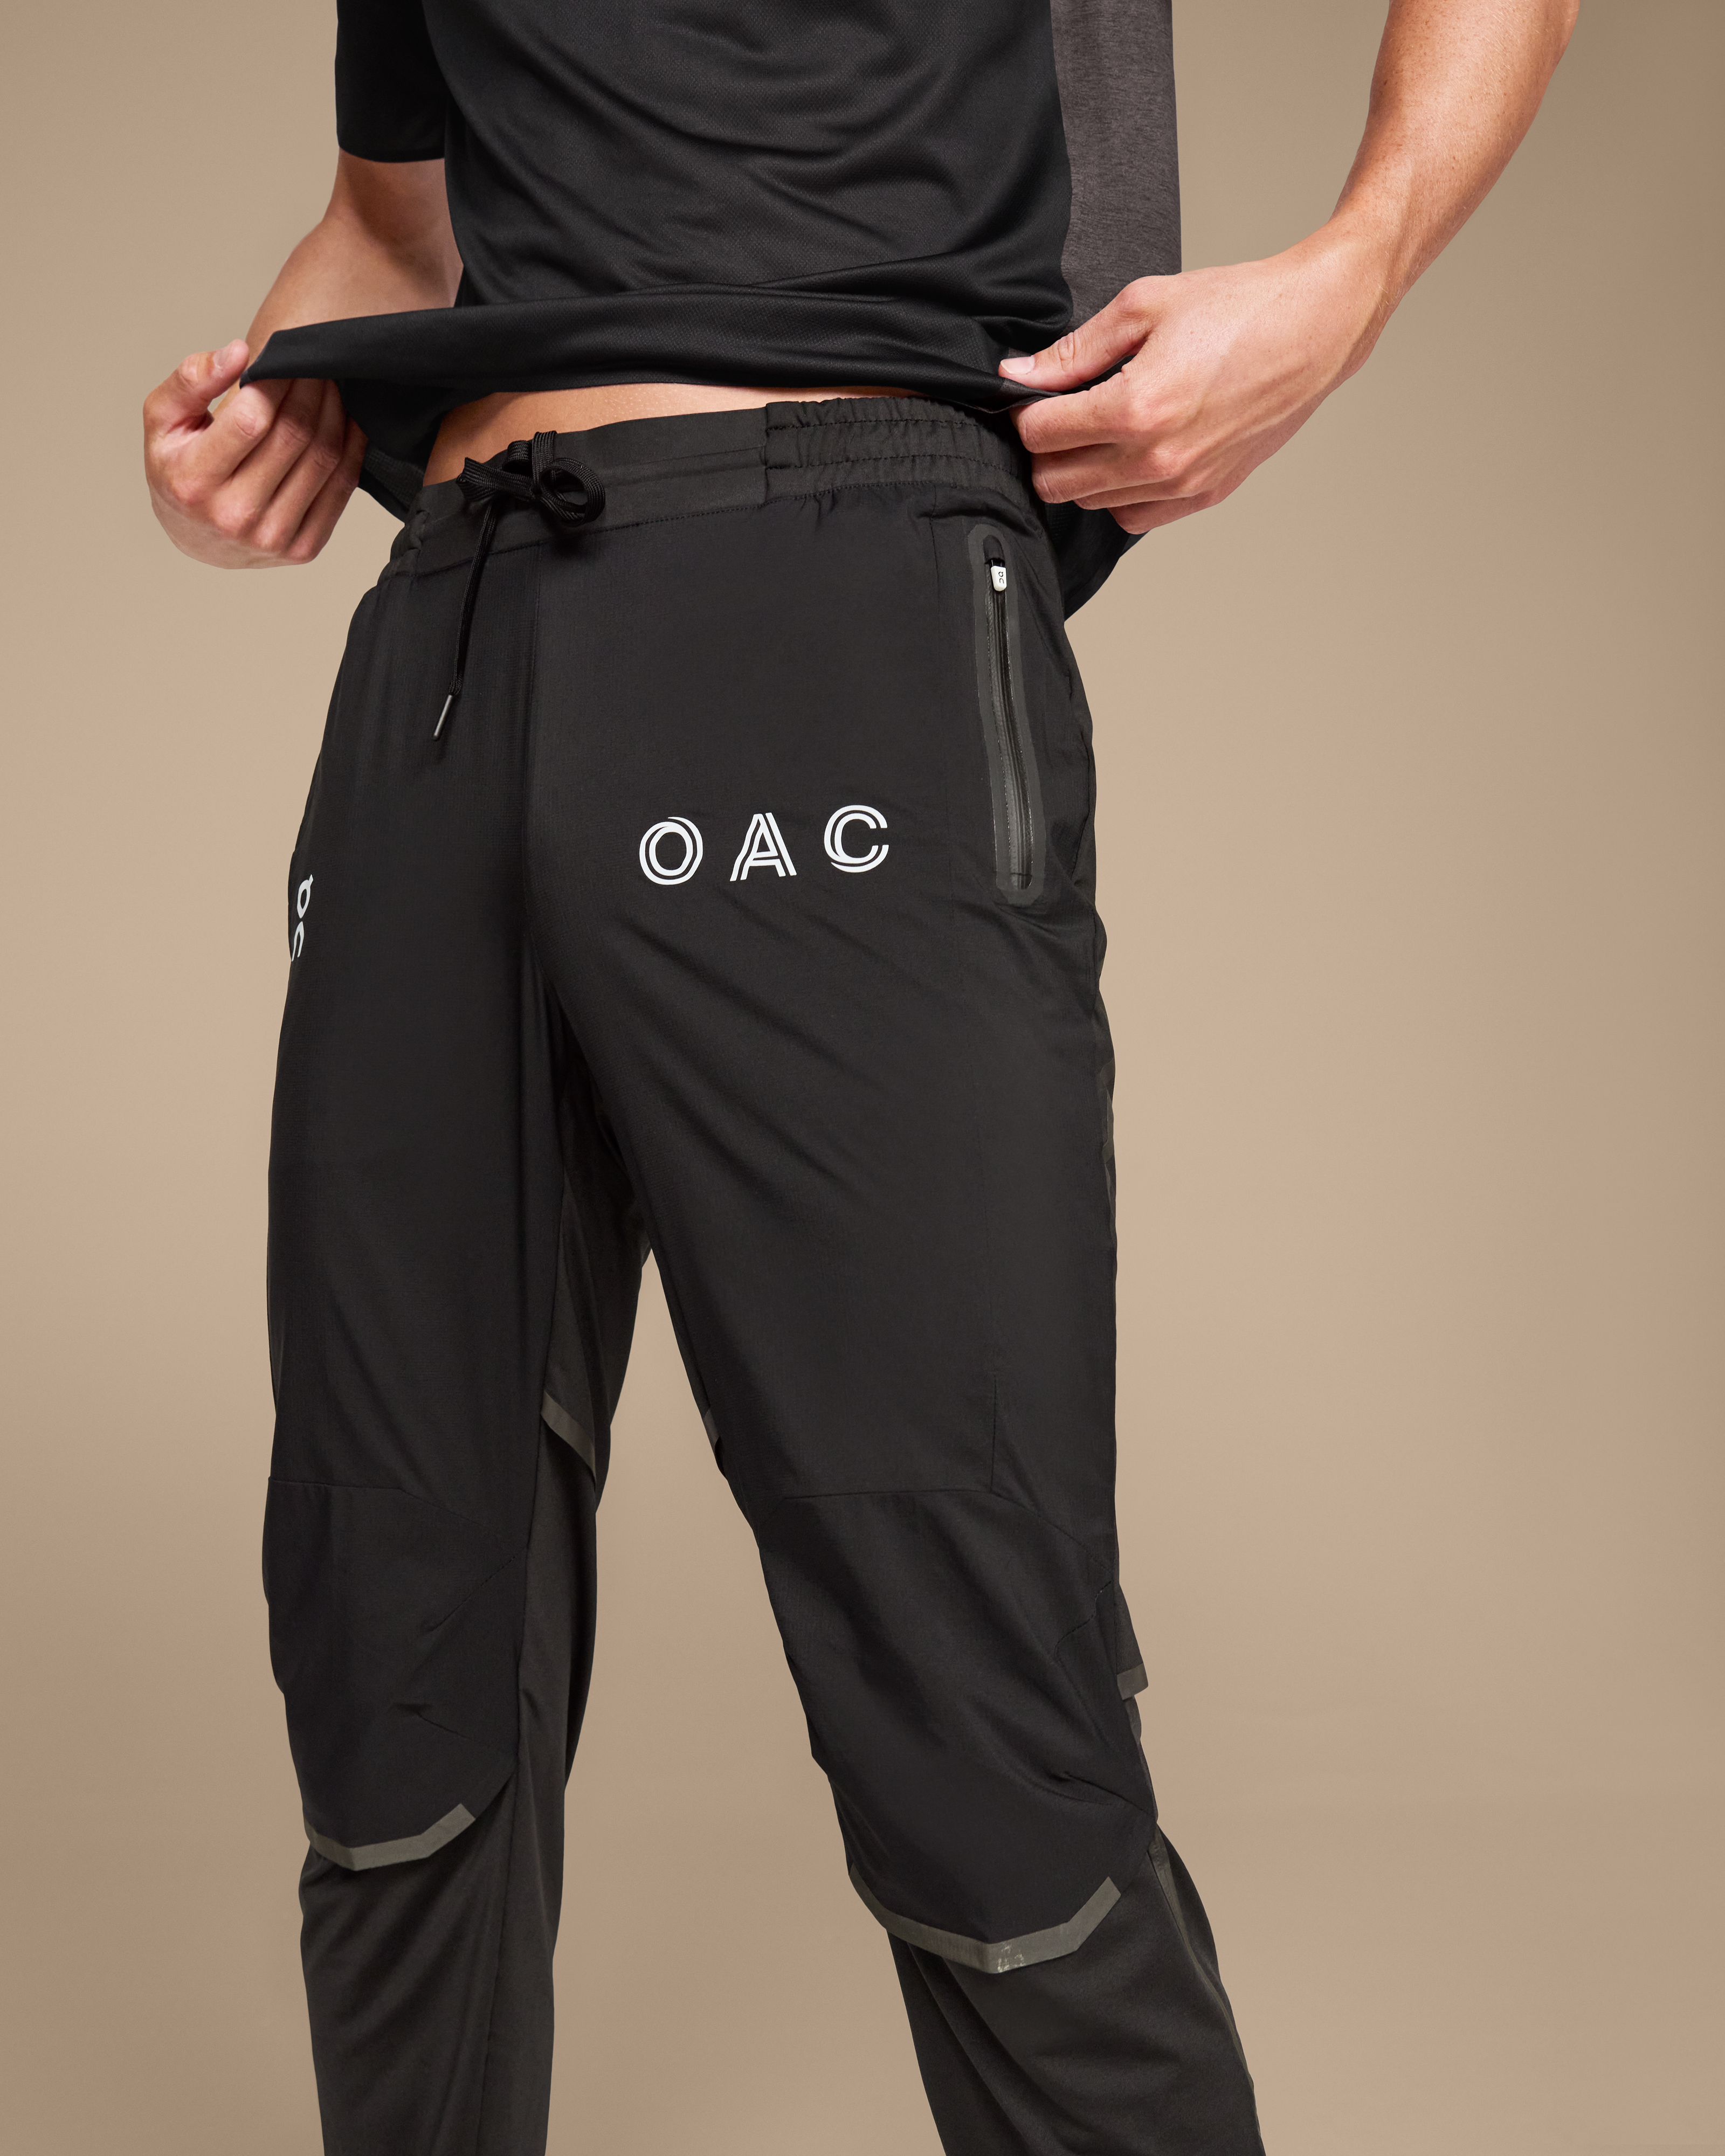 Men's Running Pants OAC | Black | On United States